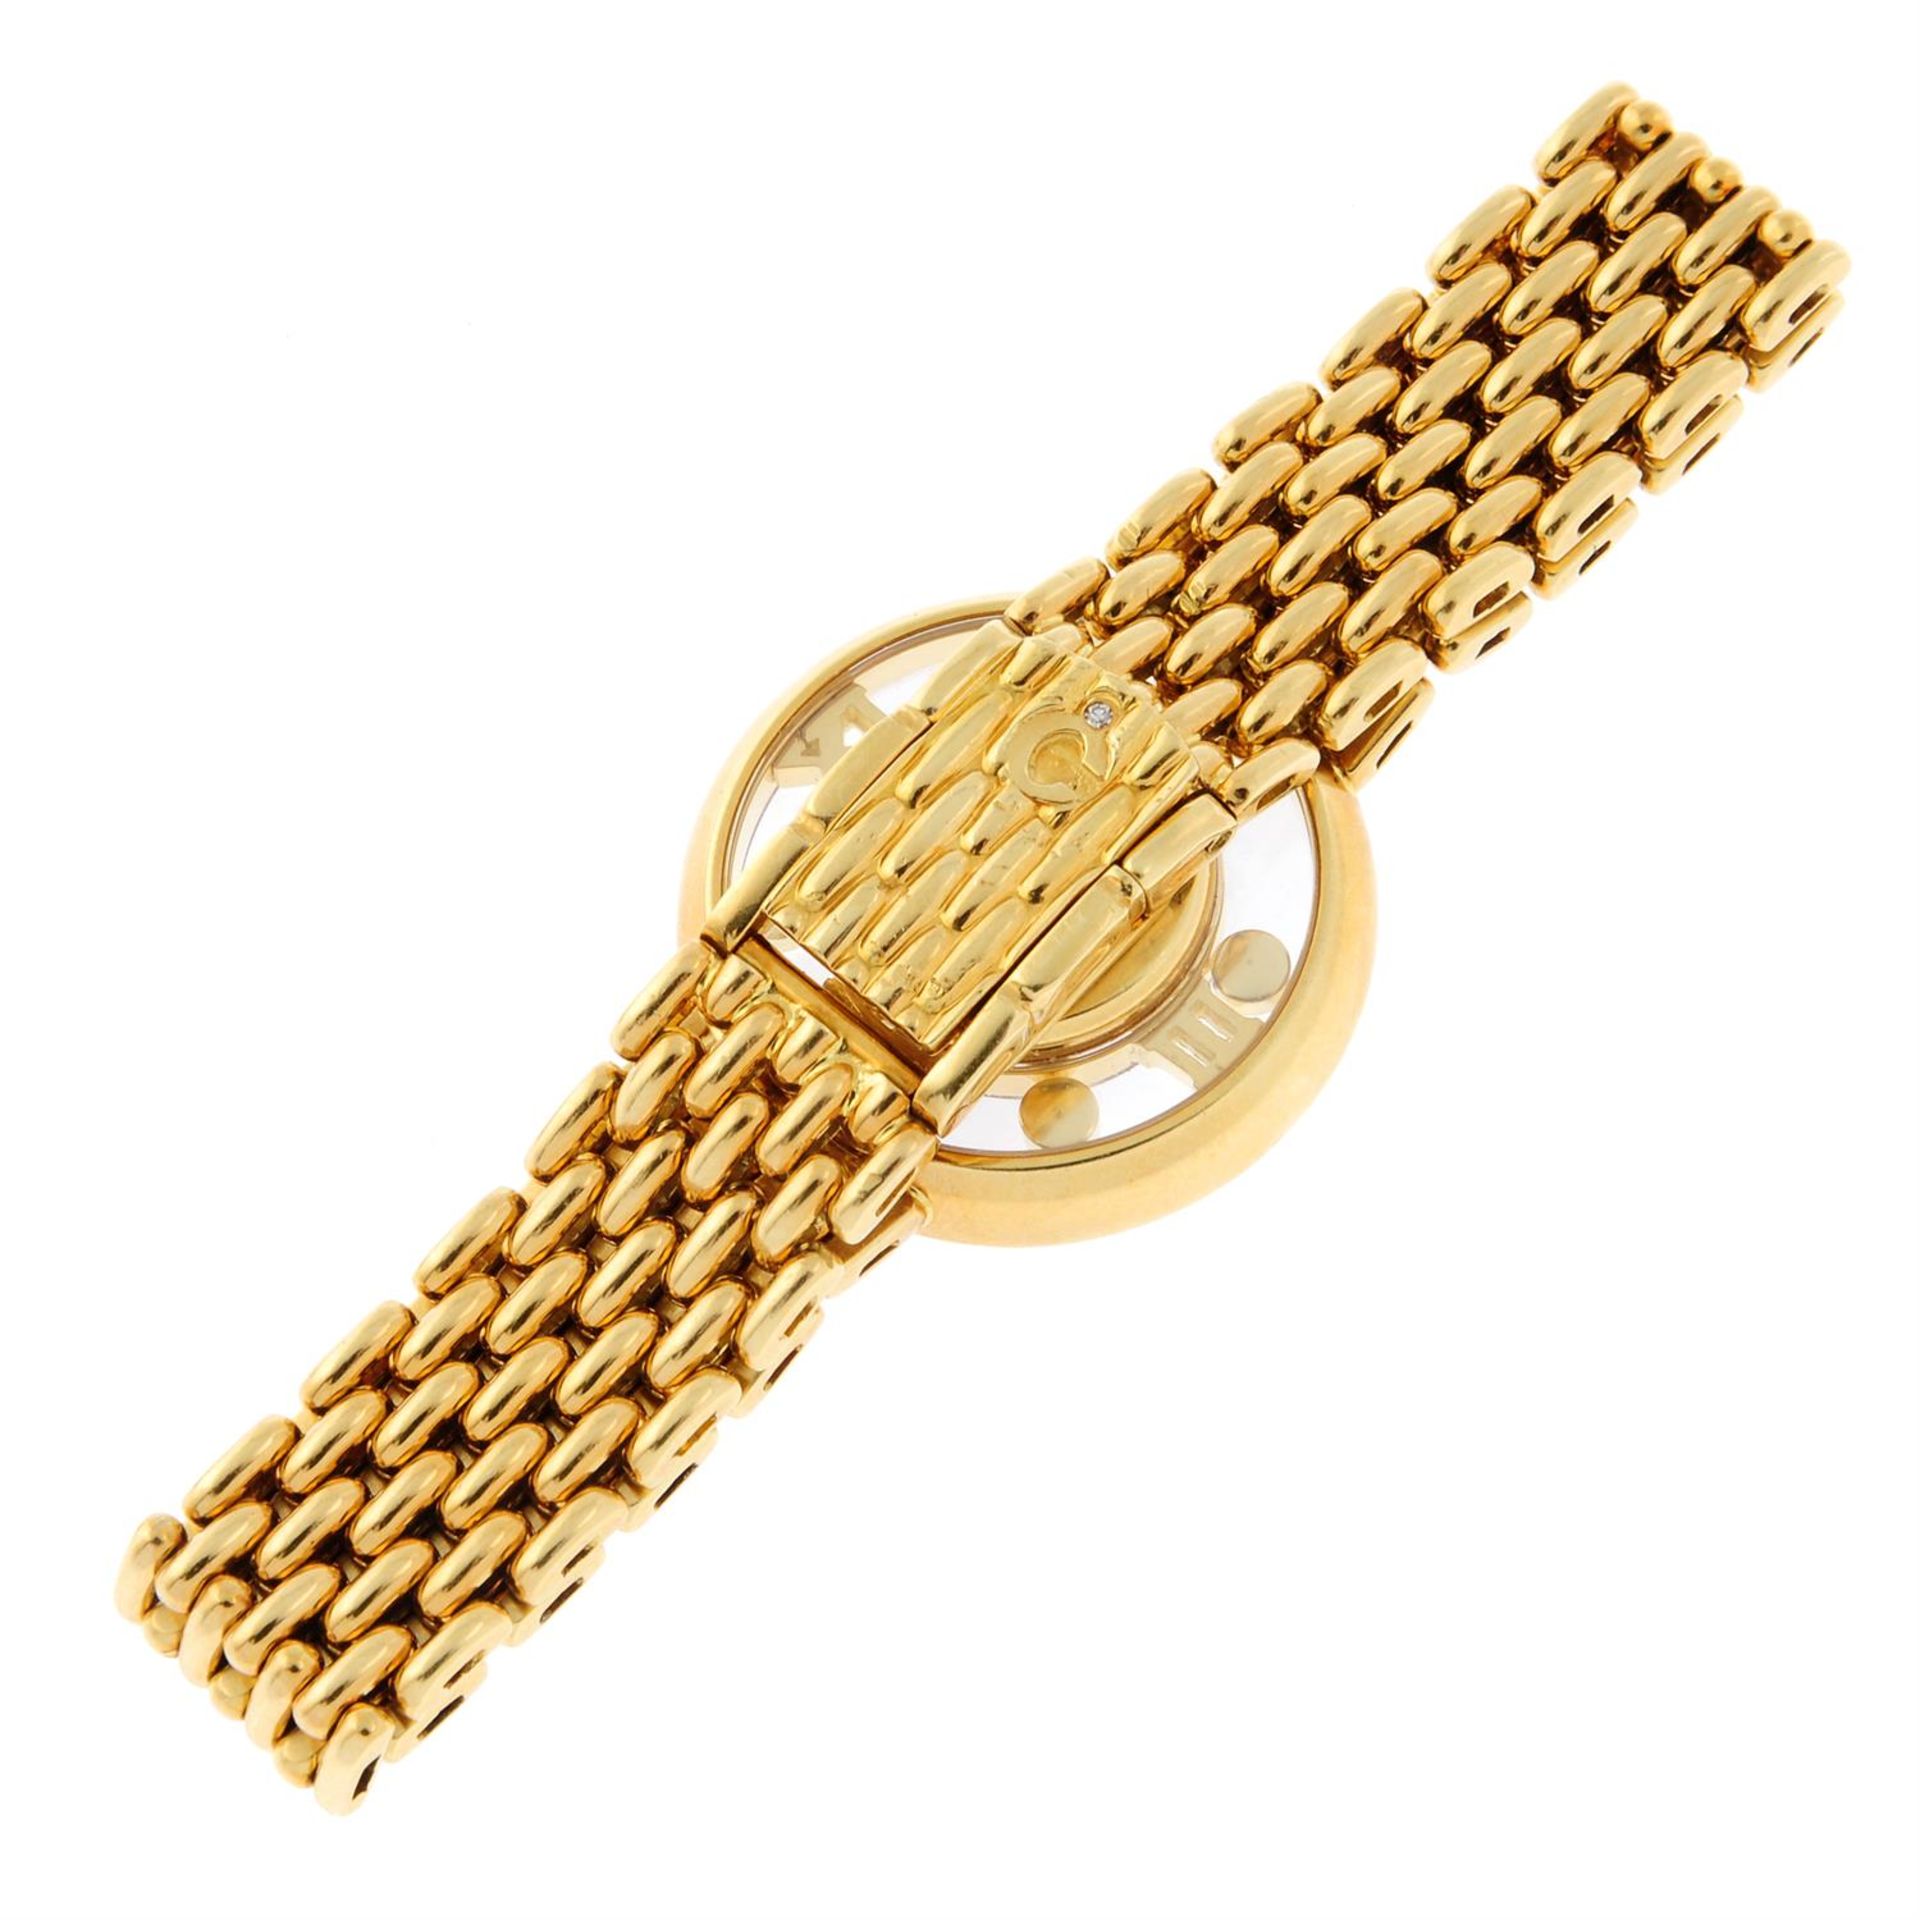 CHOPARD - a factory diamond set 18ct yellow gold Happy Diamonds bracelet watch, 24mm. - Bild 2 aus 5